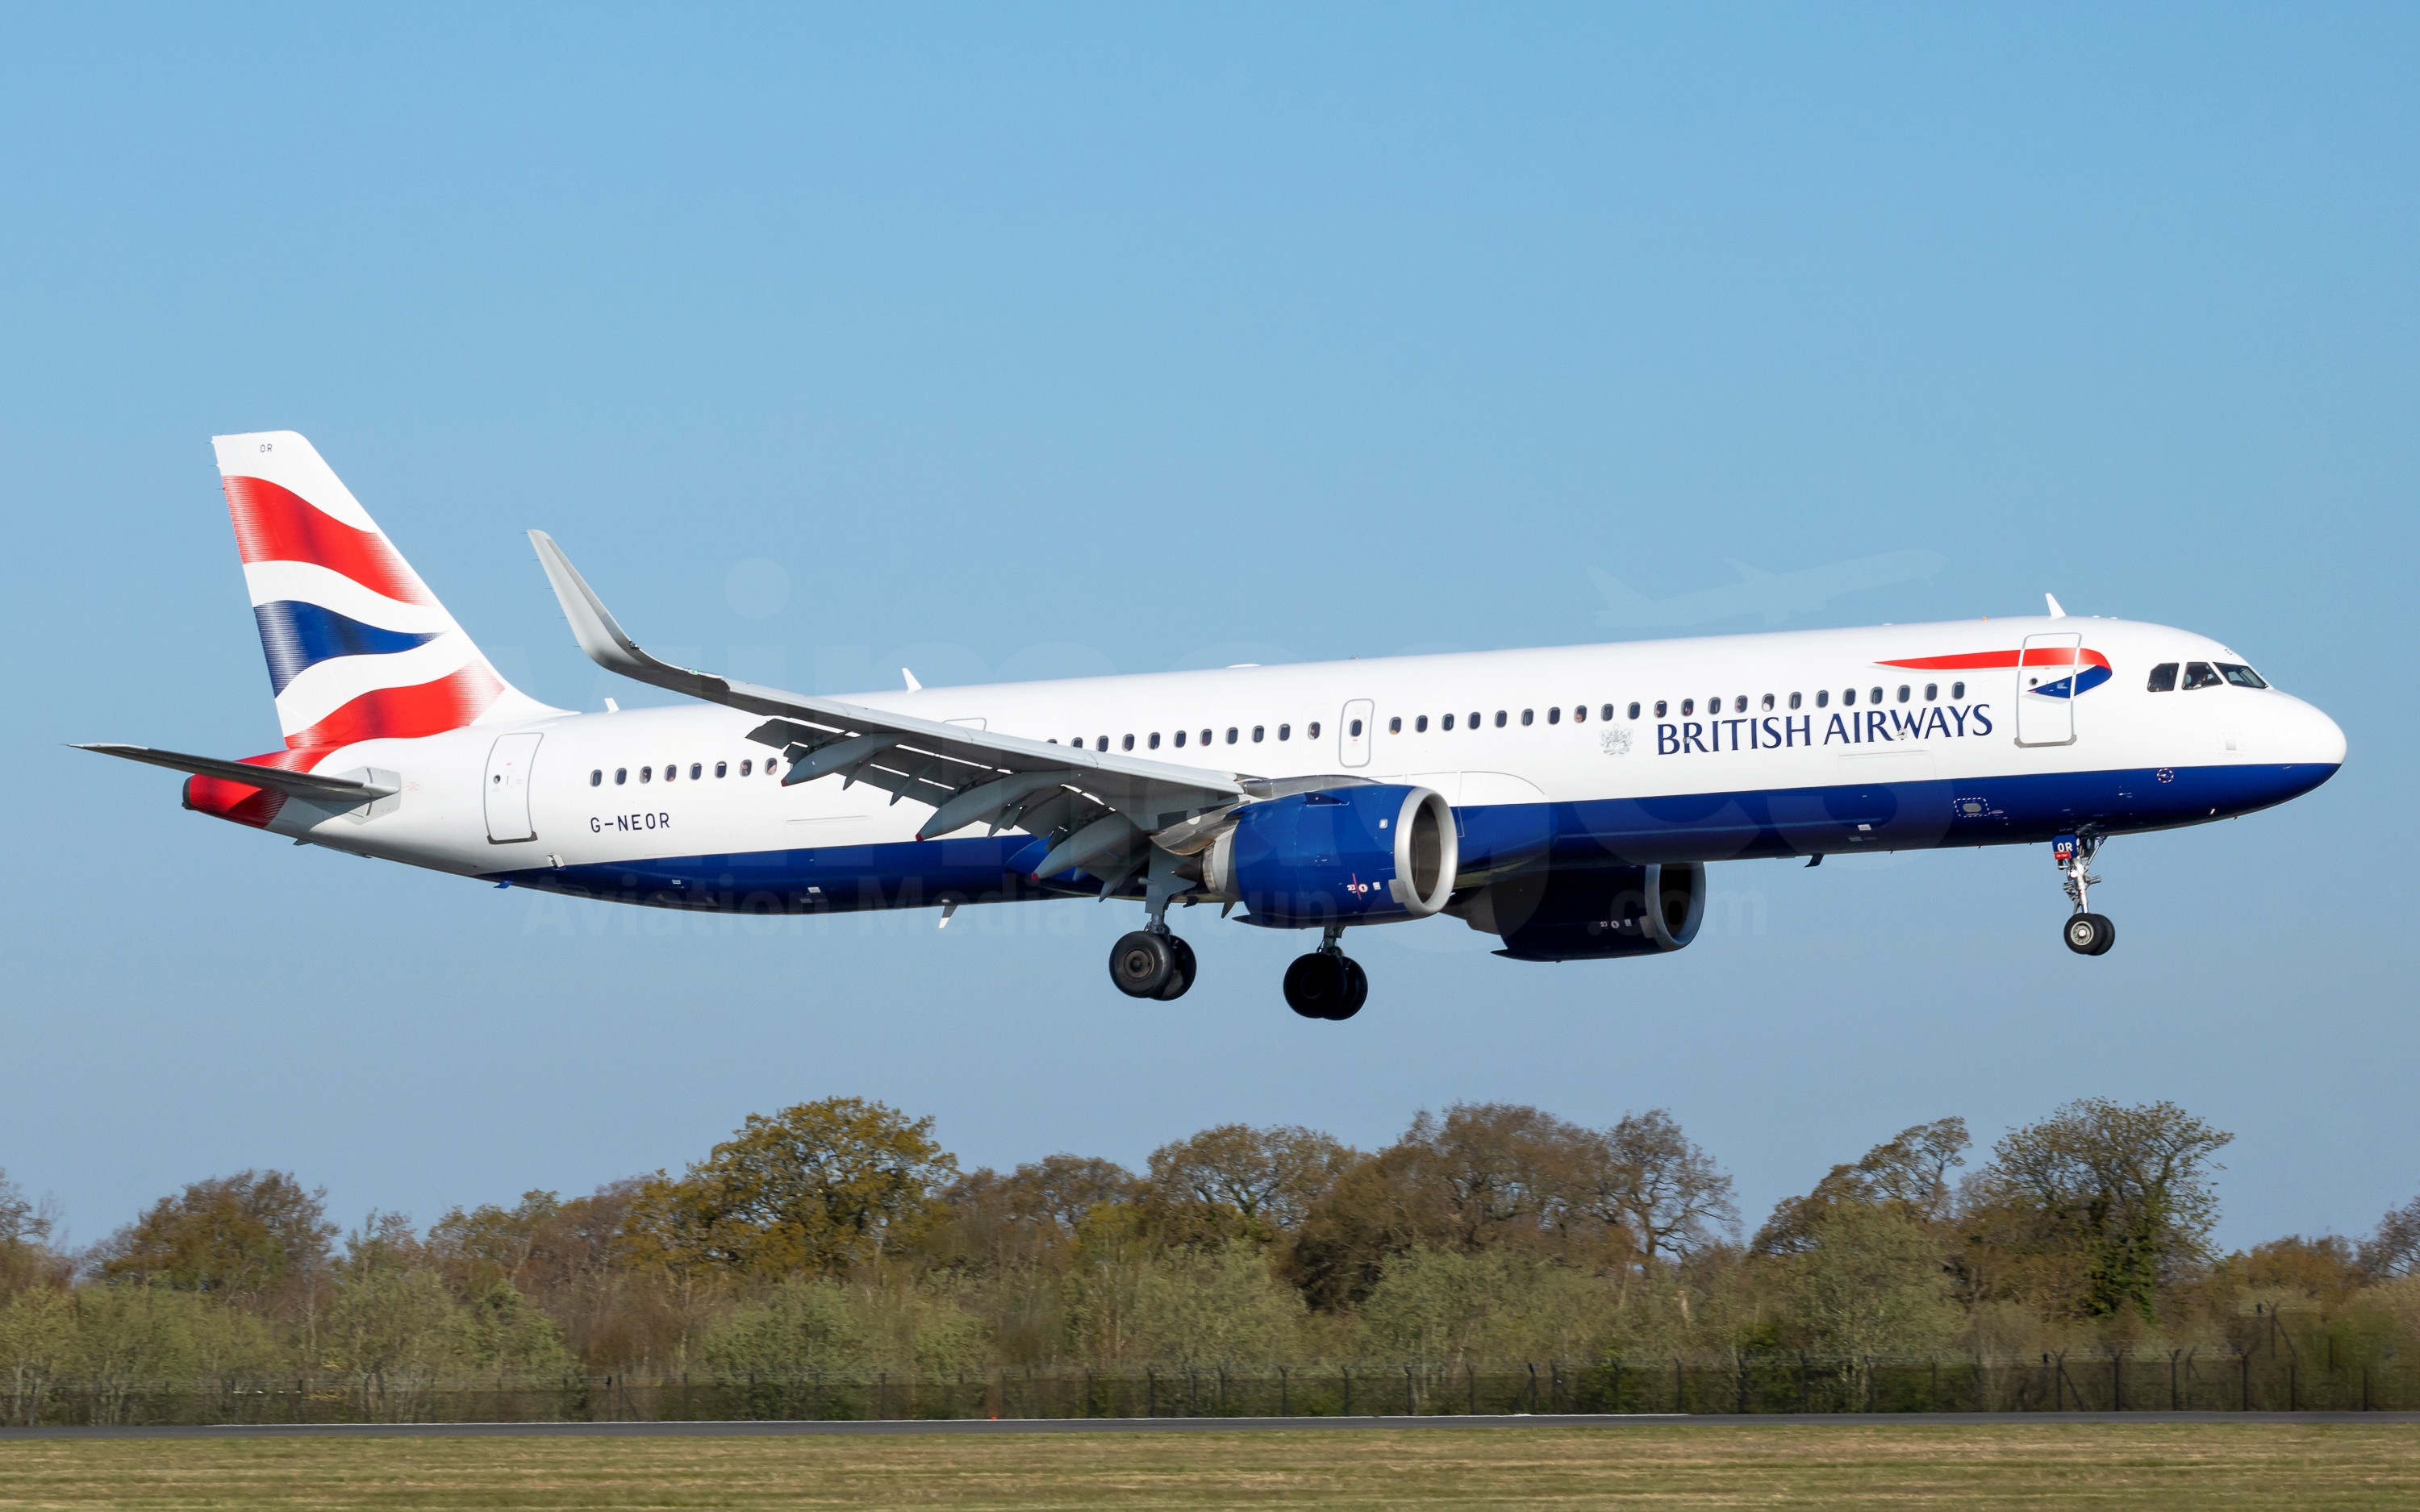 British Airways Airbus A321-251NX G-NEOR – v1images Aviation Media